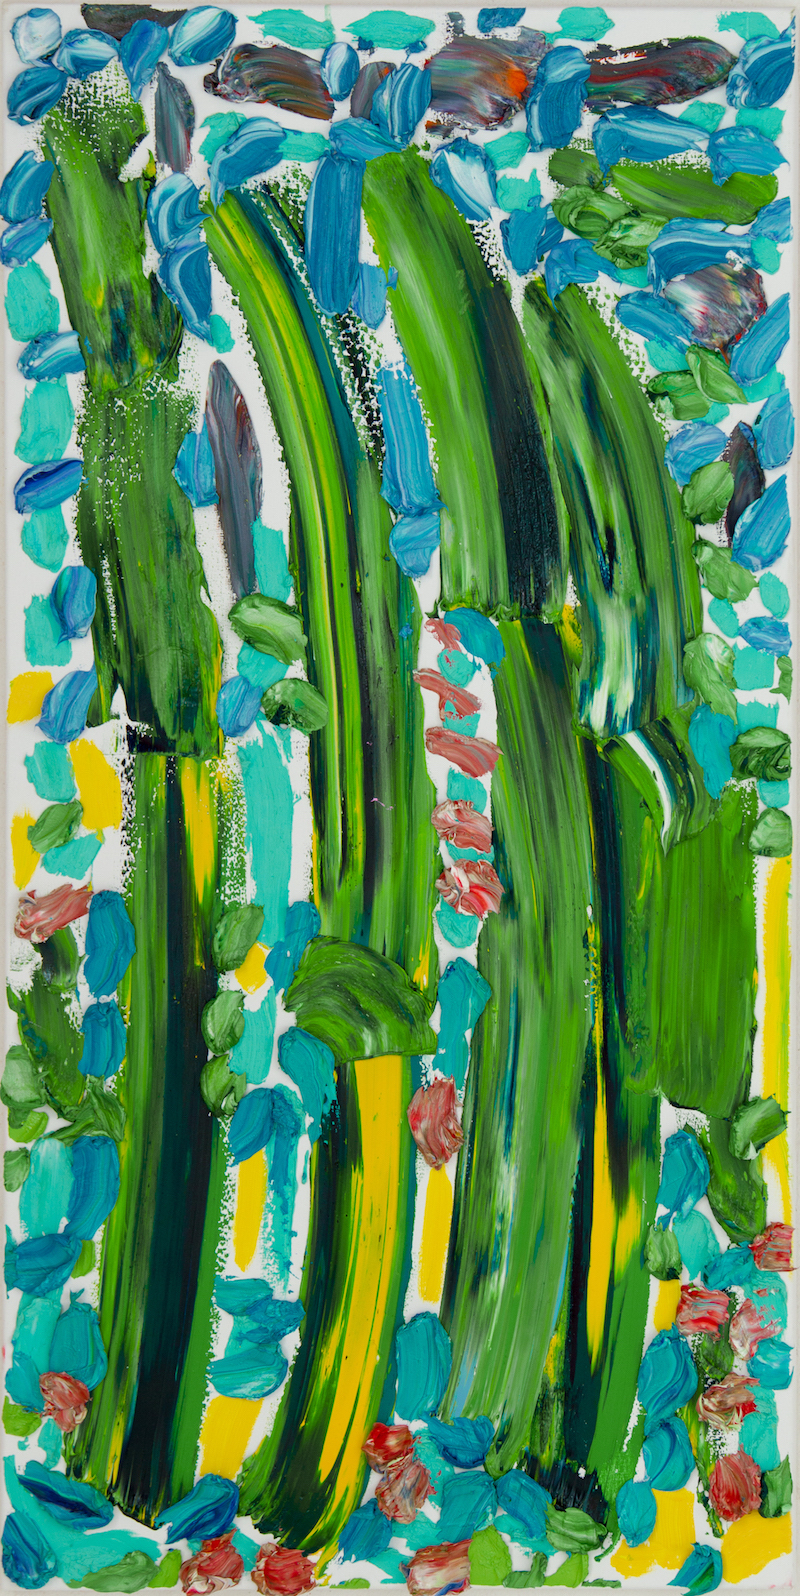 Llewellyn Xavier - Célébration : bambusoideae in bloom. 2017, huile sur toile, 122 x 61 cm.